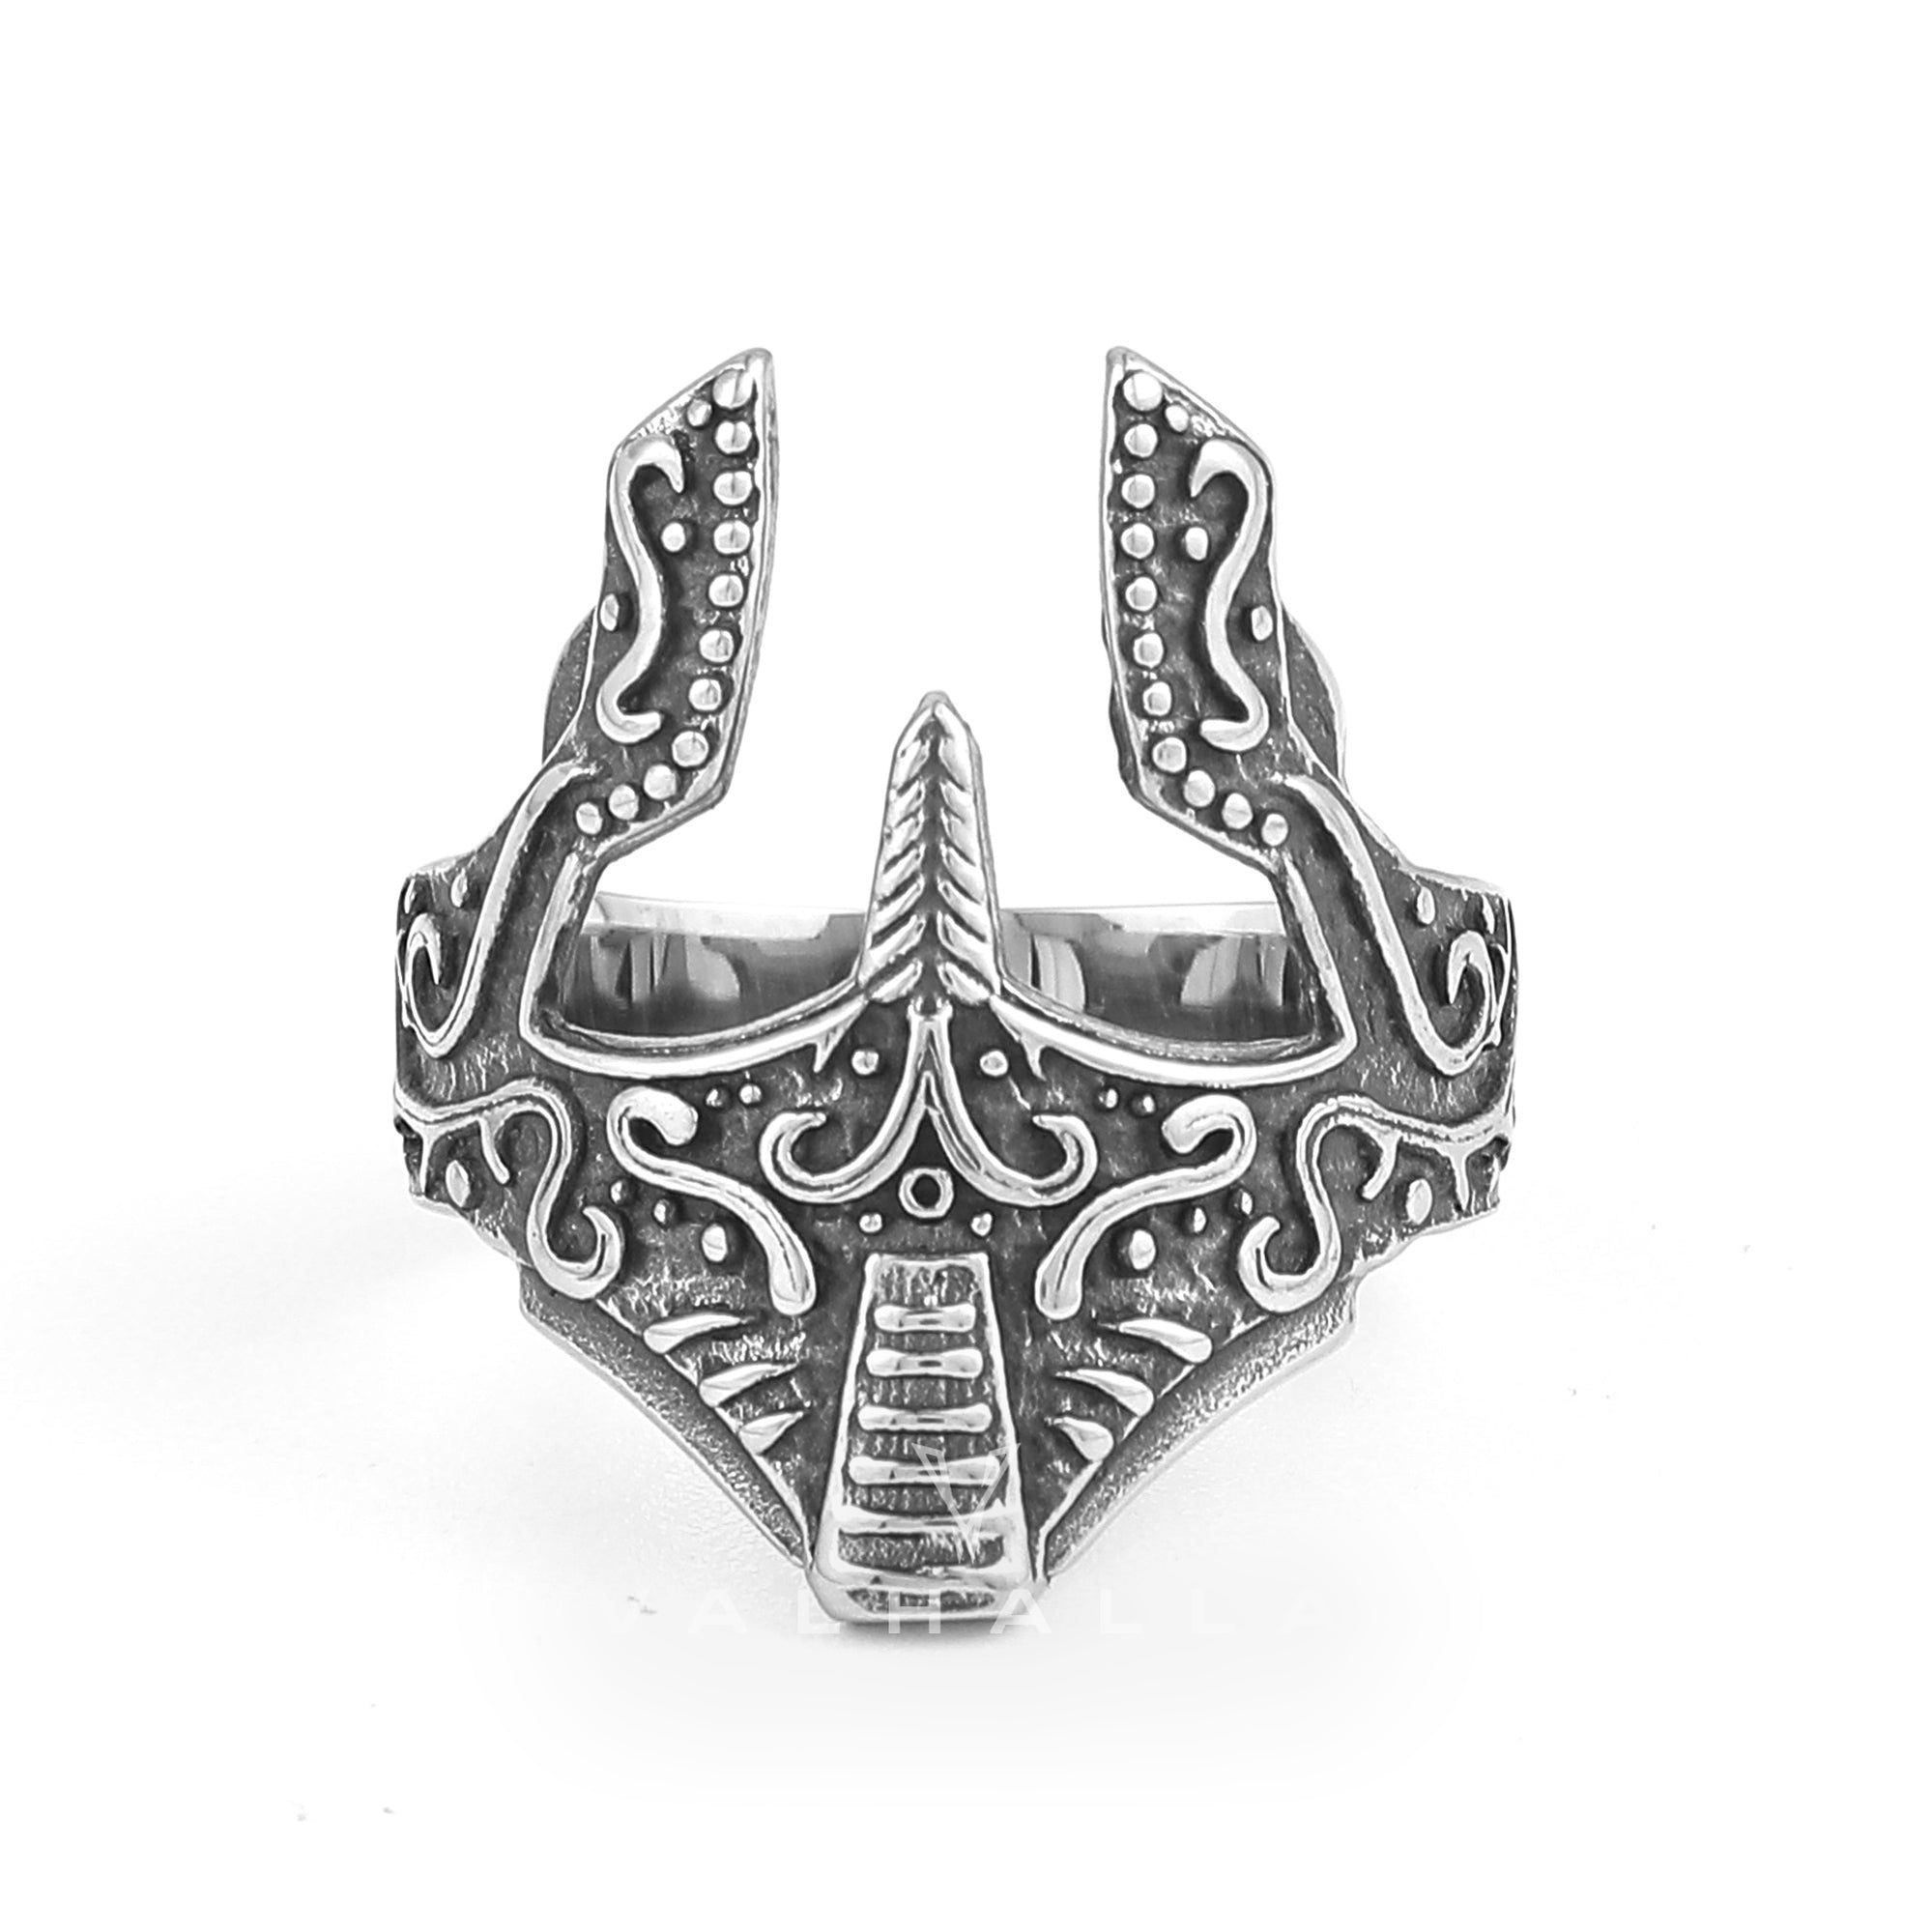 Handcrafted Stainless Steel Warrior Helmet Ring